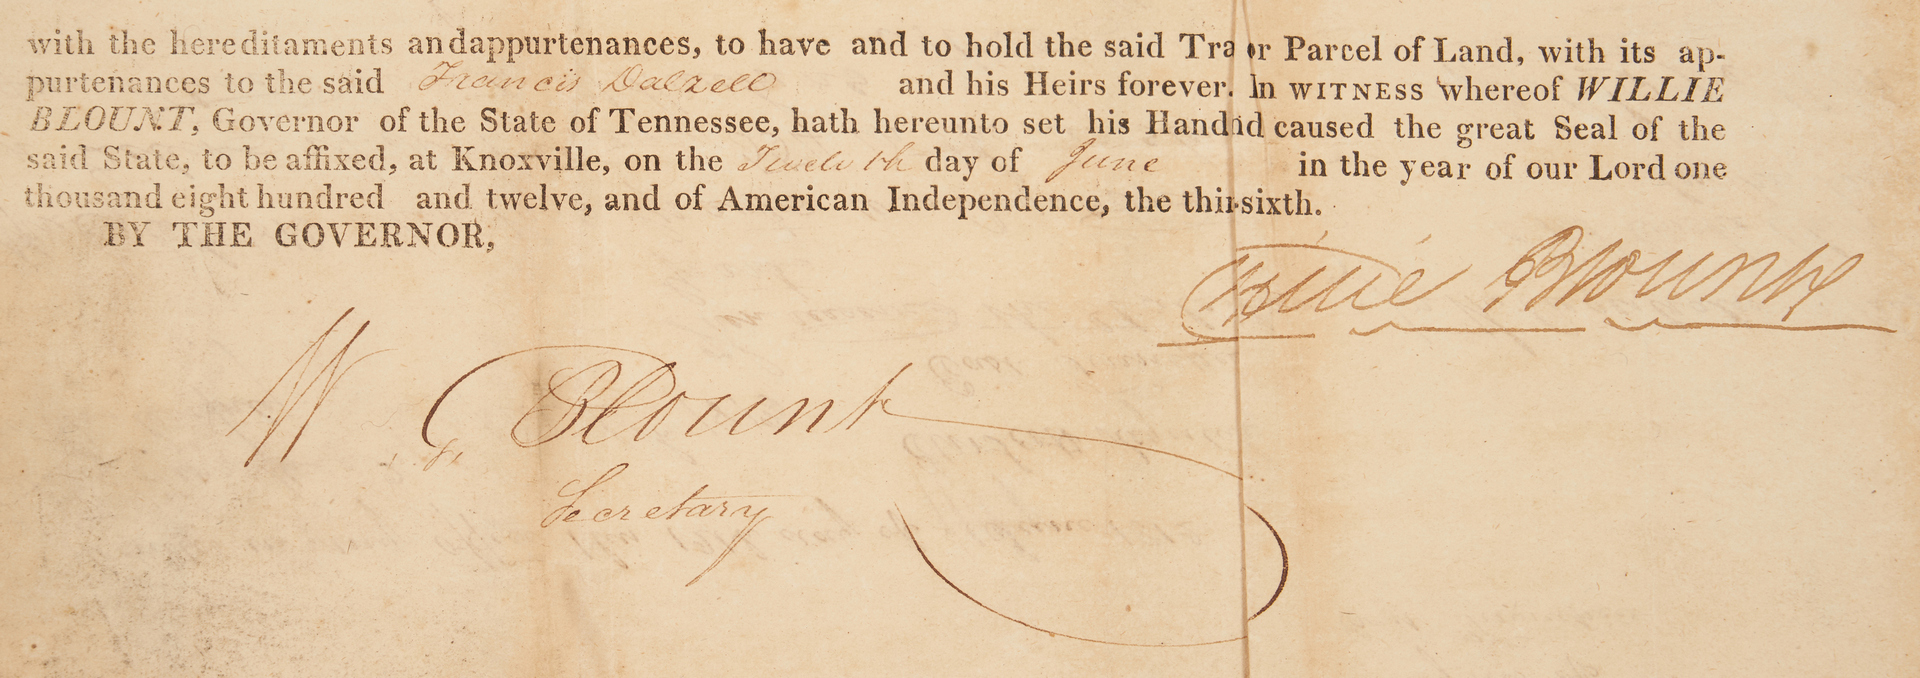 Lot 642: TN Governor Signed Land Grant Archive + Broadside